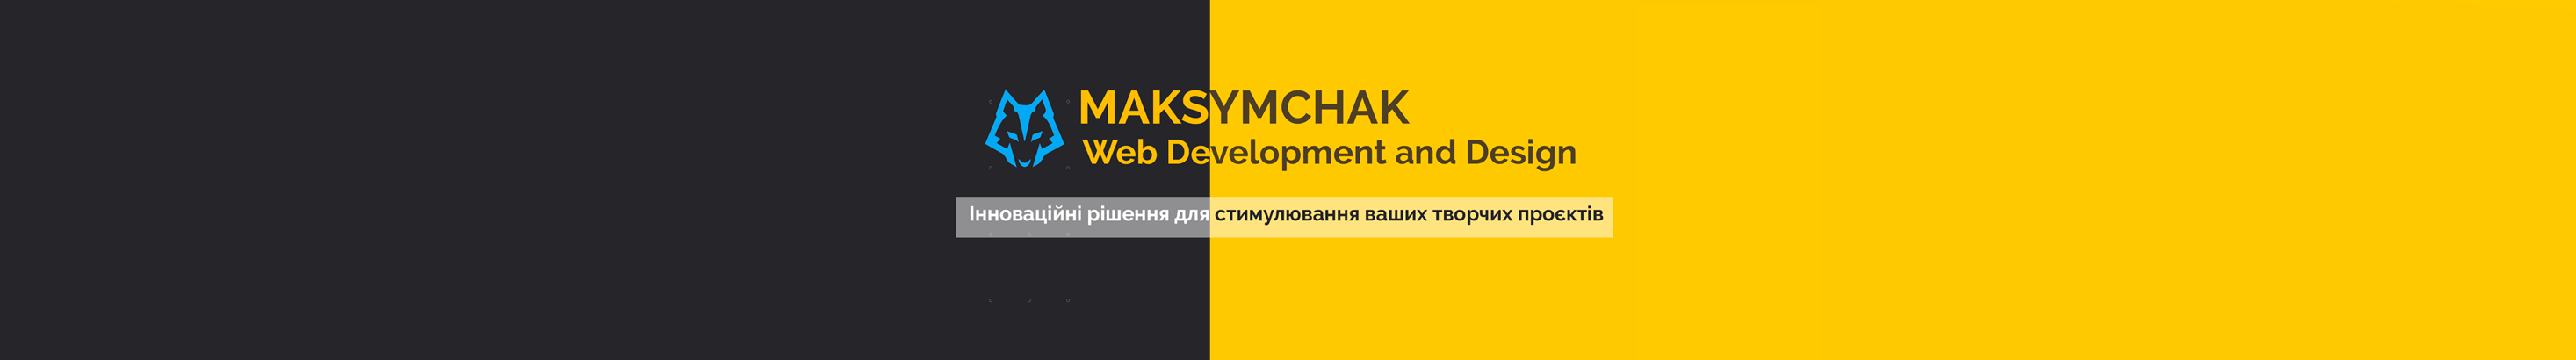 Volodymyr Maksymchak's profile banner